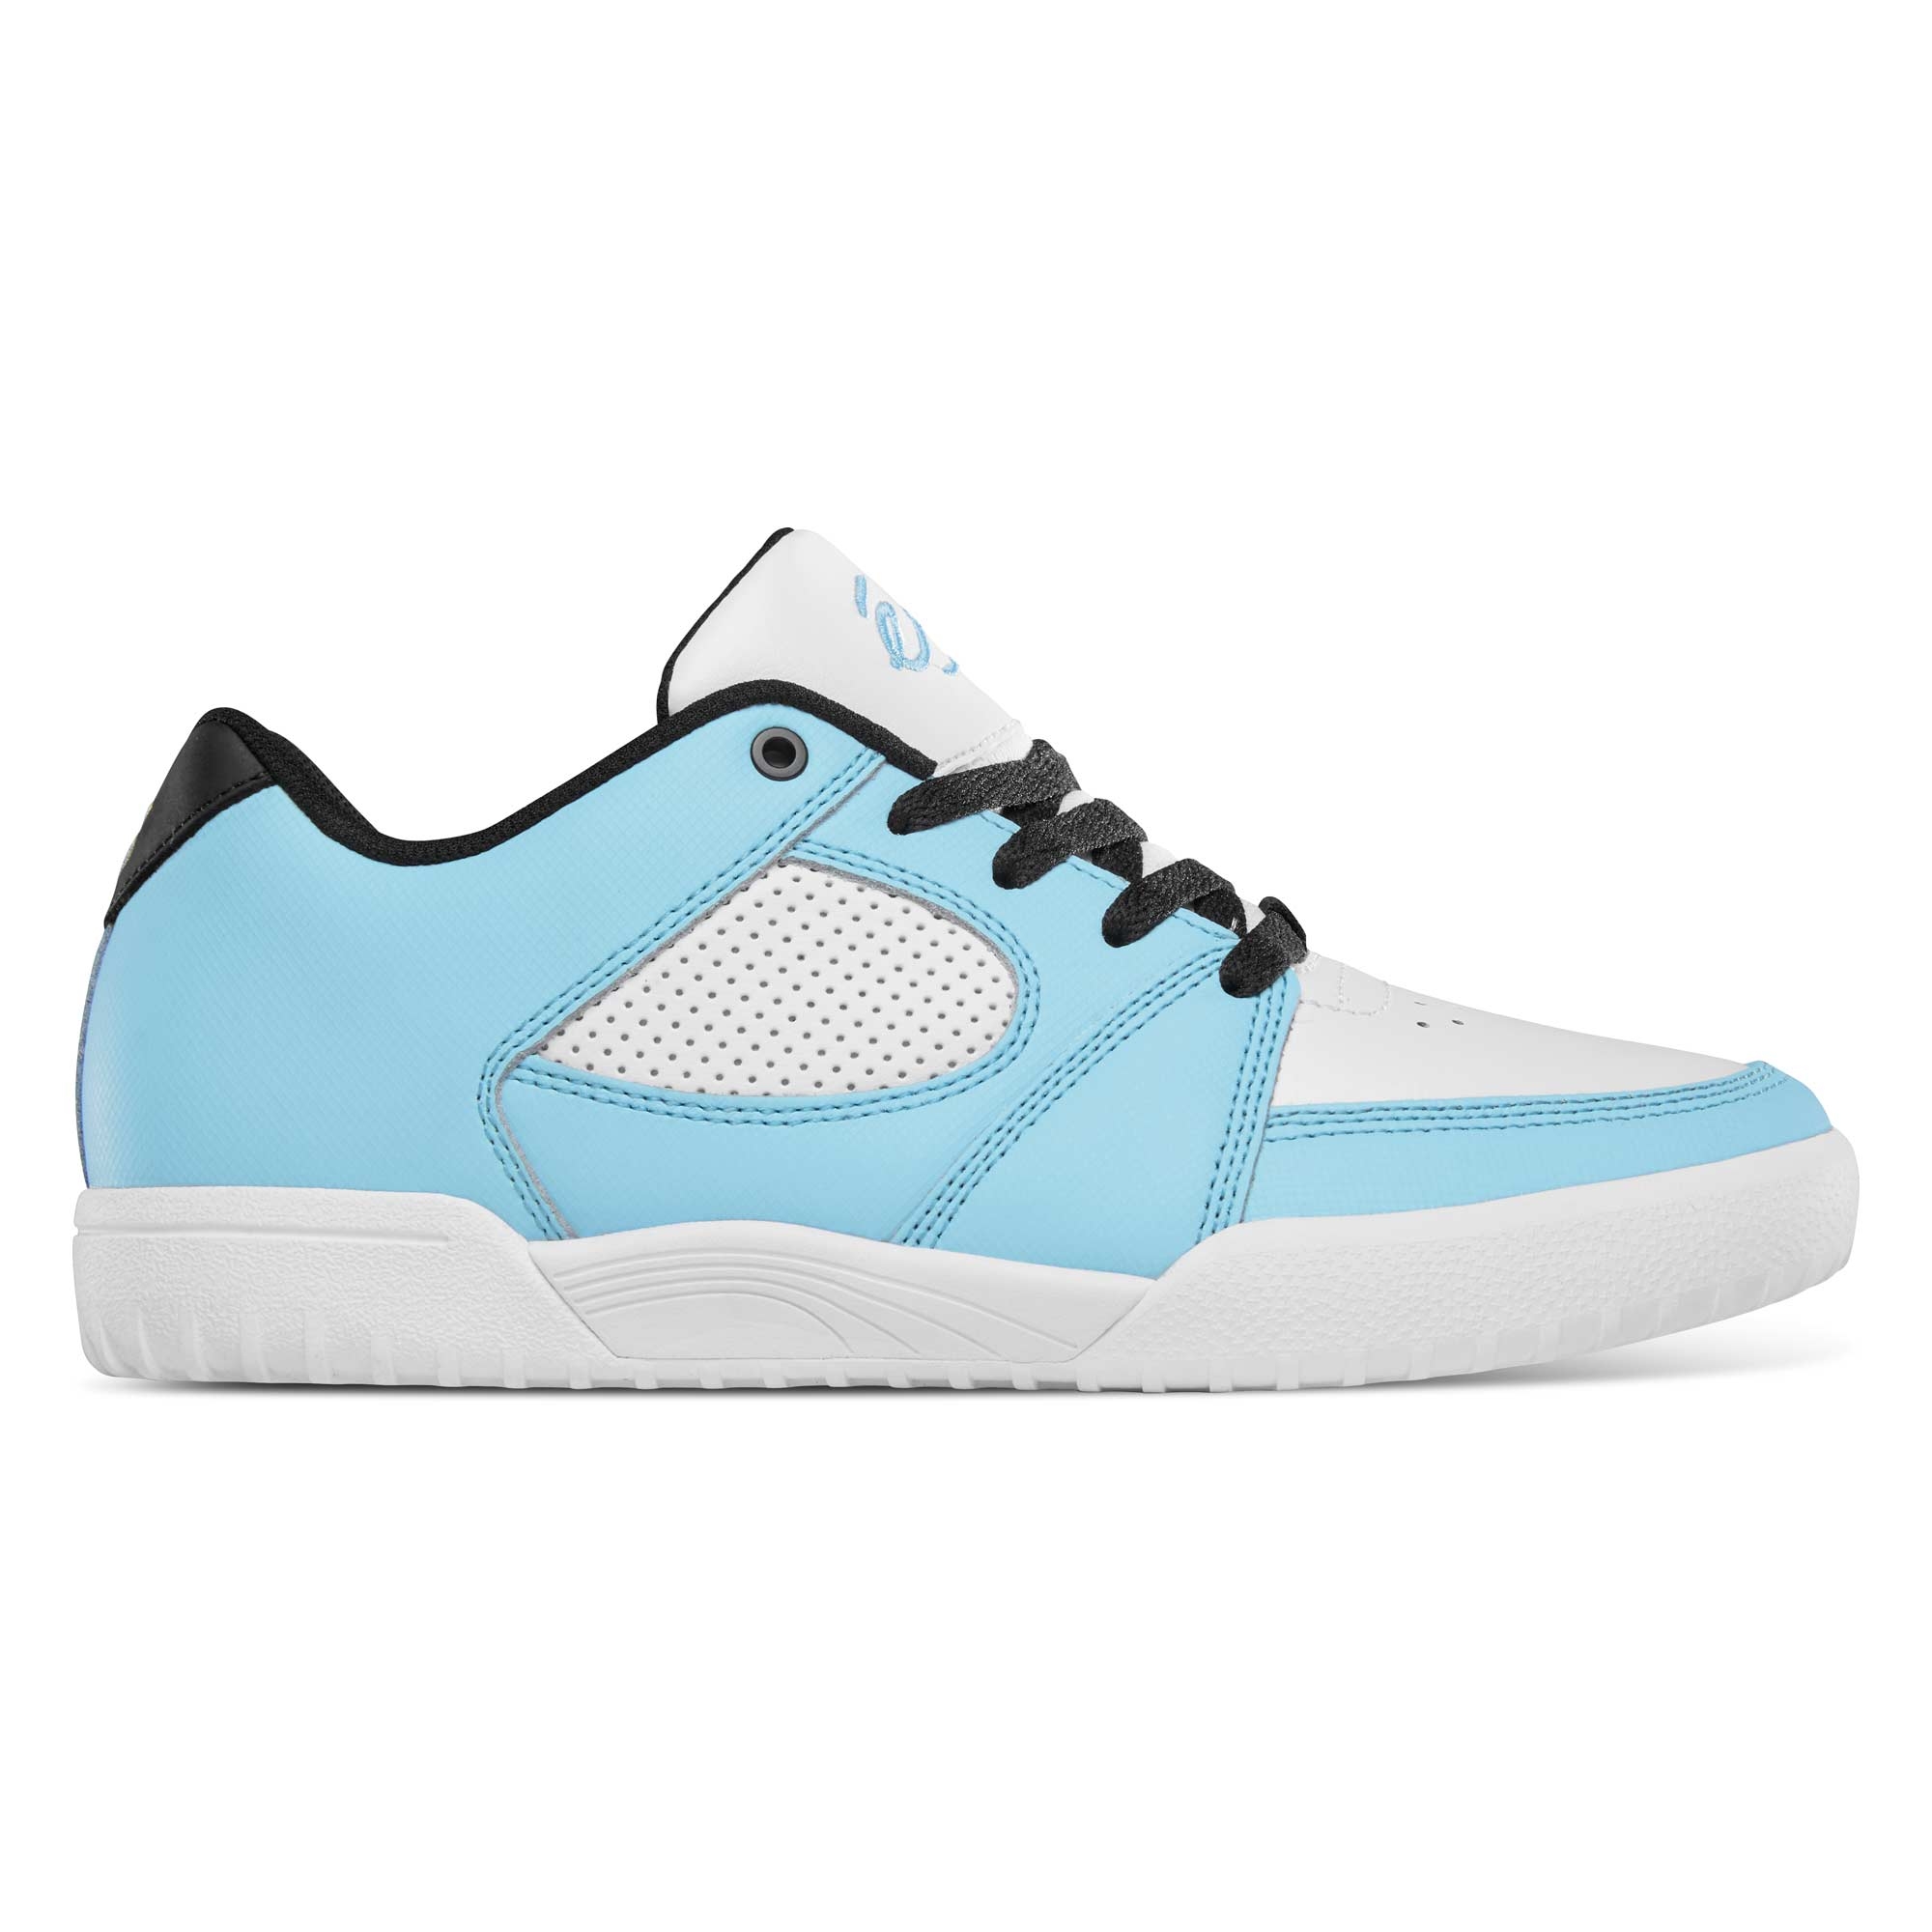 eS SKB Shoe ACCEL SLIM X QUATTRO blu/bla/whi, blue/black/white